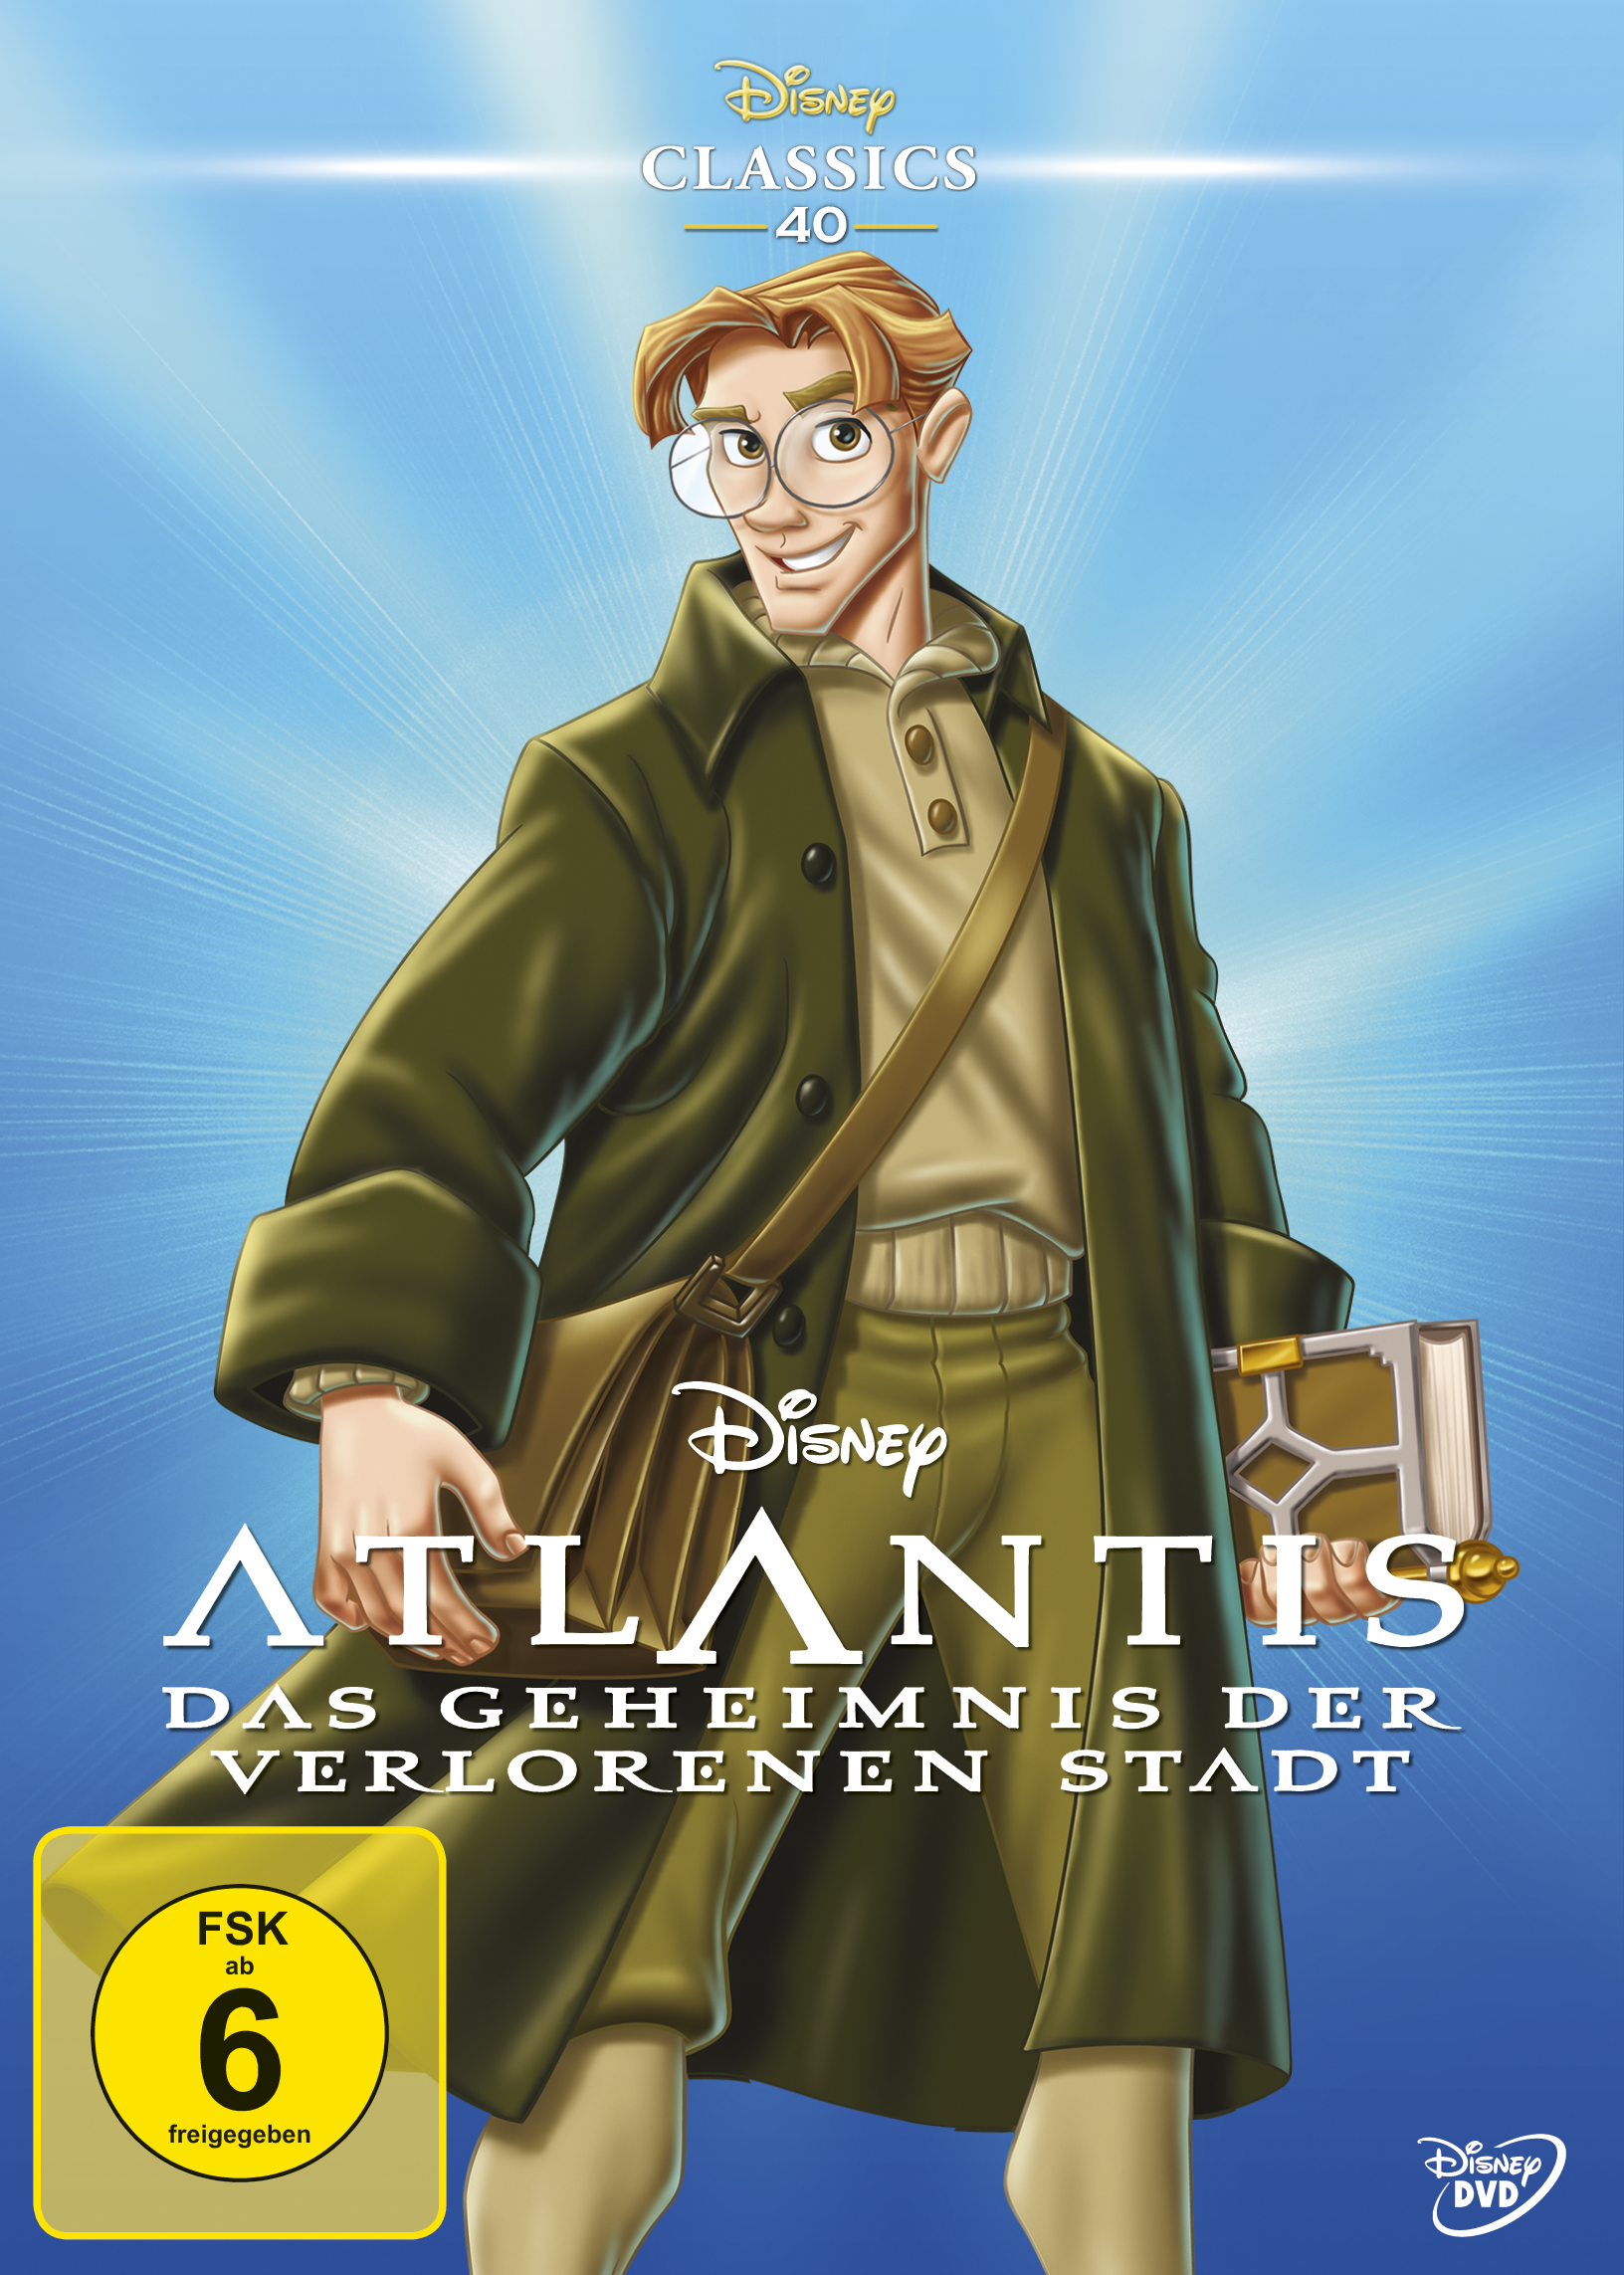 verlorenen Das Geheimnis Stadt - Classics) DVD Atlantis der (Disney